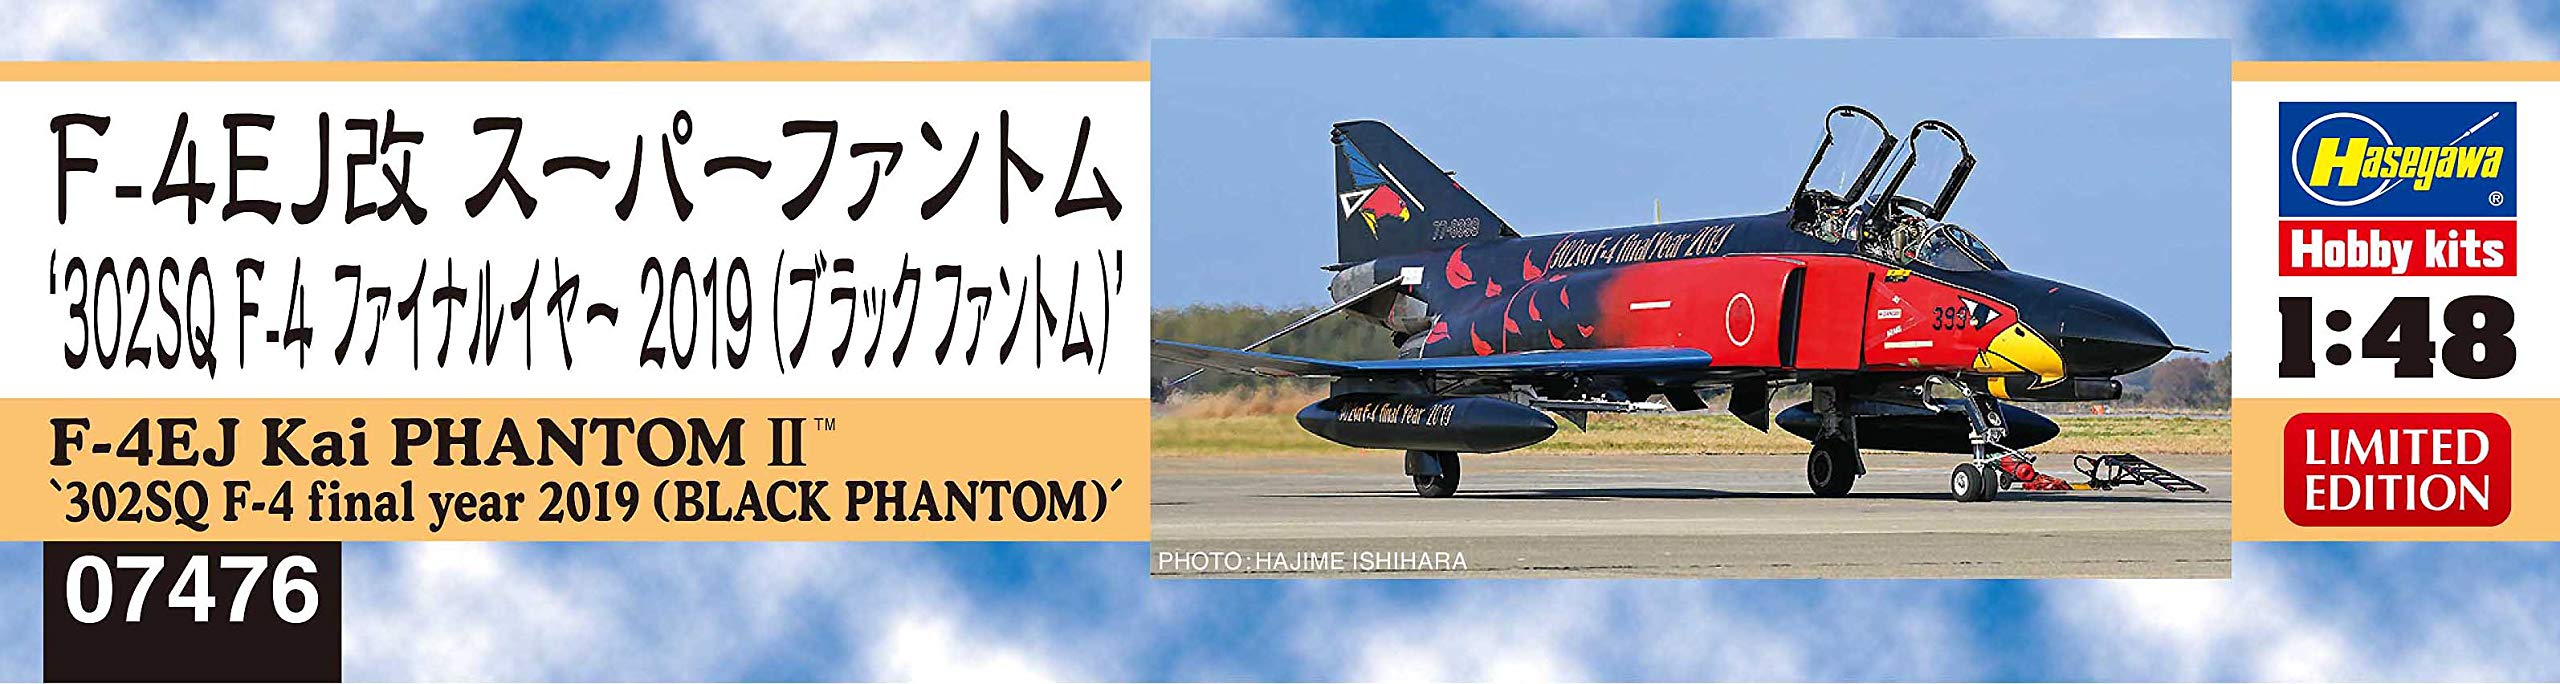 HASEGAWA 07476 F-4Ej Kai Super Phantom 302Sq F-4 Final Year 2019 Black Phantom 1/48 Scale Kit